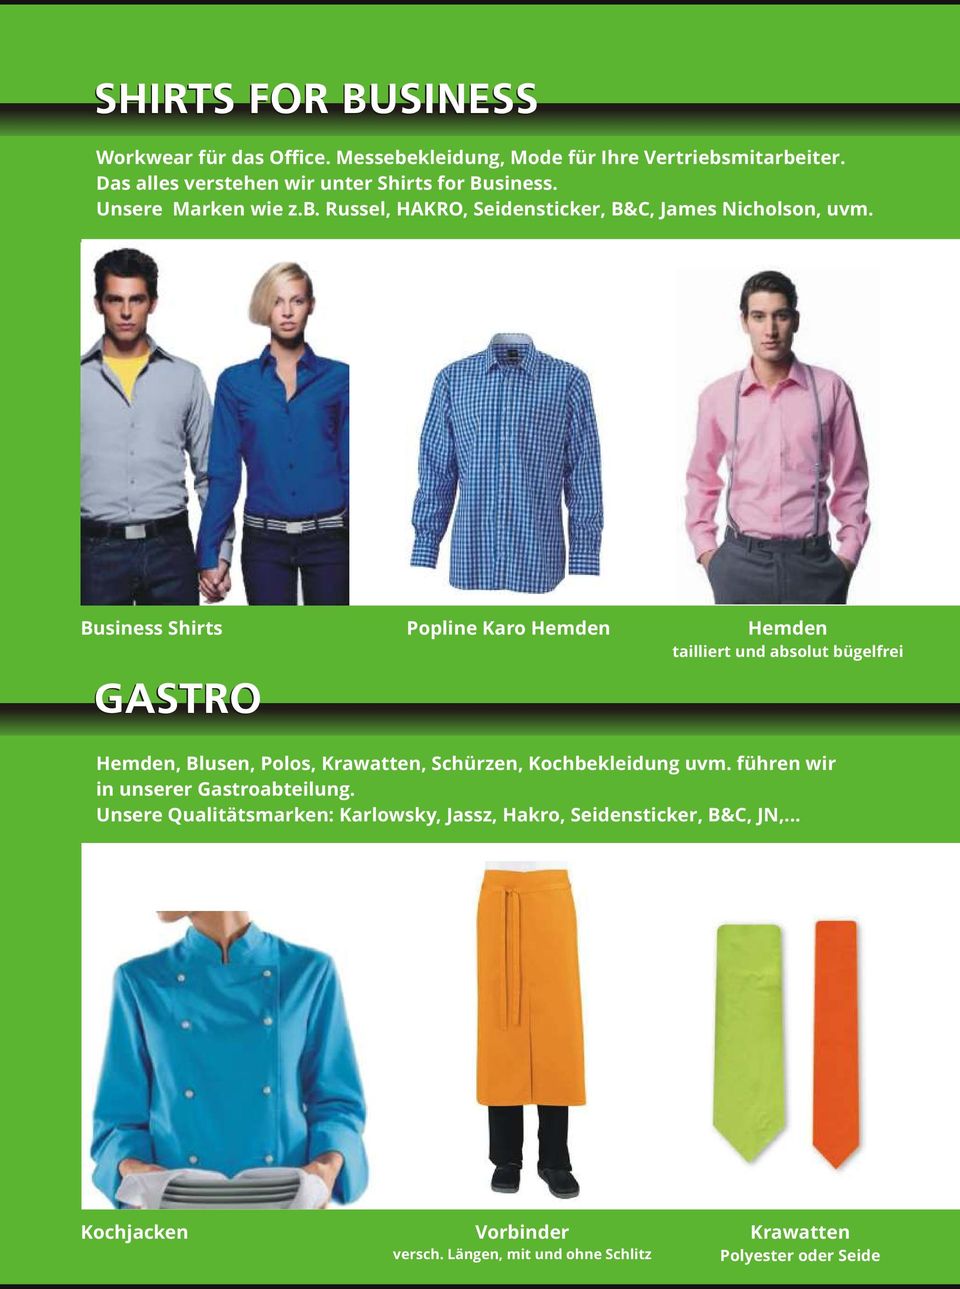 Business Shirts GASTRO Popline Karo Hemden Hemden tailliert und absolut bügelfrei Hemden, Blusen, Polos, Krawatten, Schürzen, Kochbekleidung uvm.